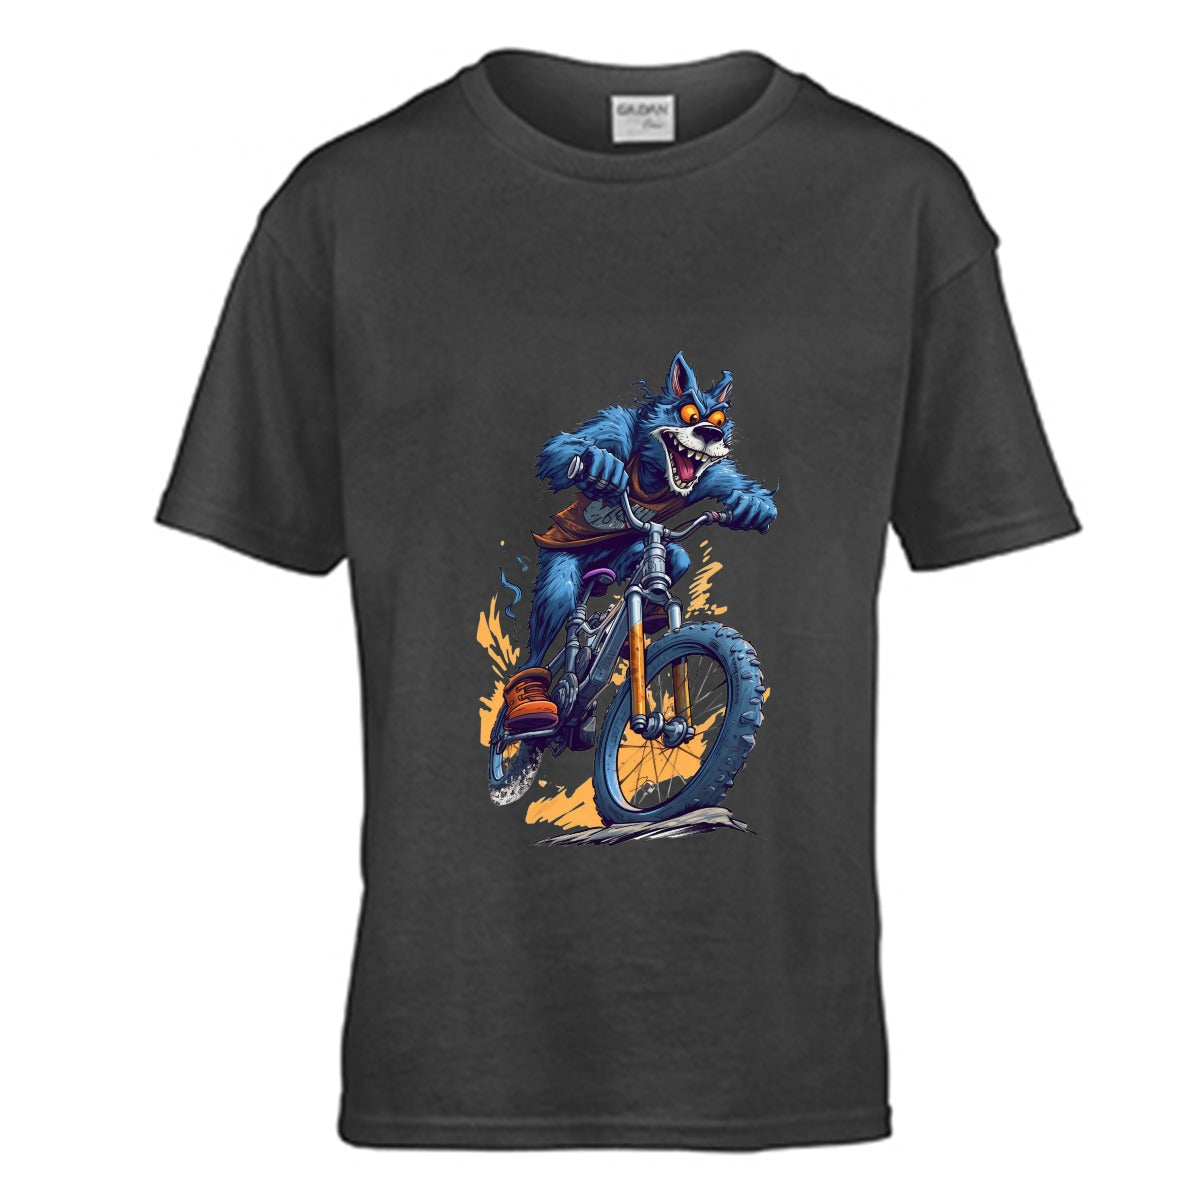 Kid's Single Side Printing Crew Neck T-shirt | Gildan 150GSM Cotton (DTG)